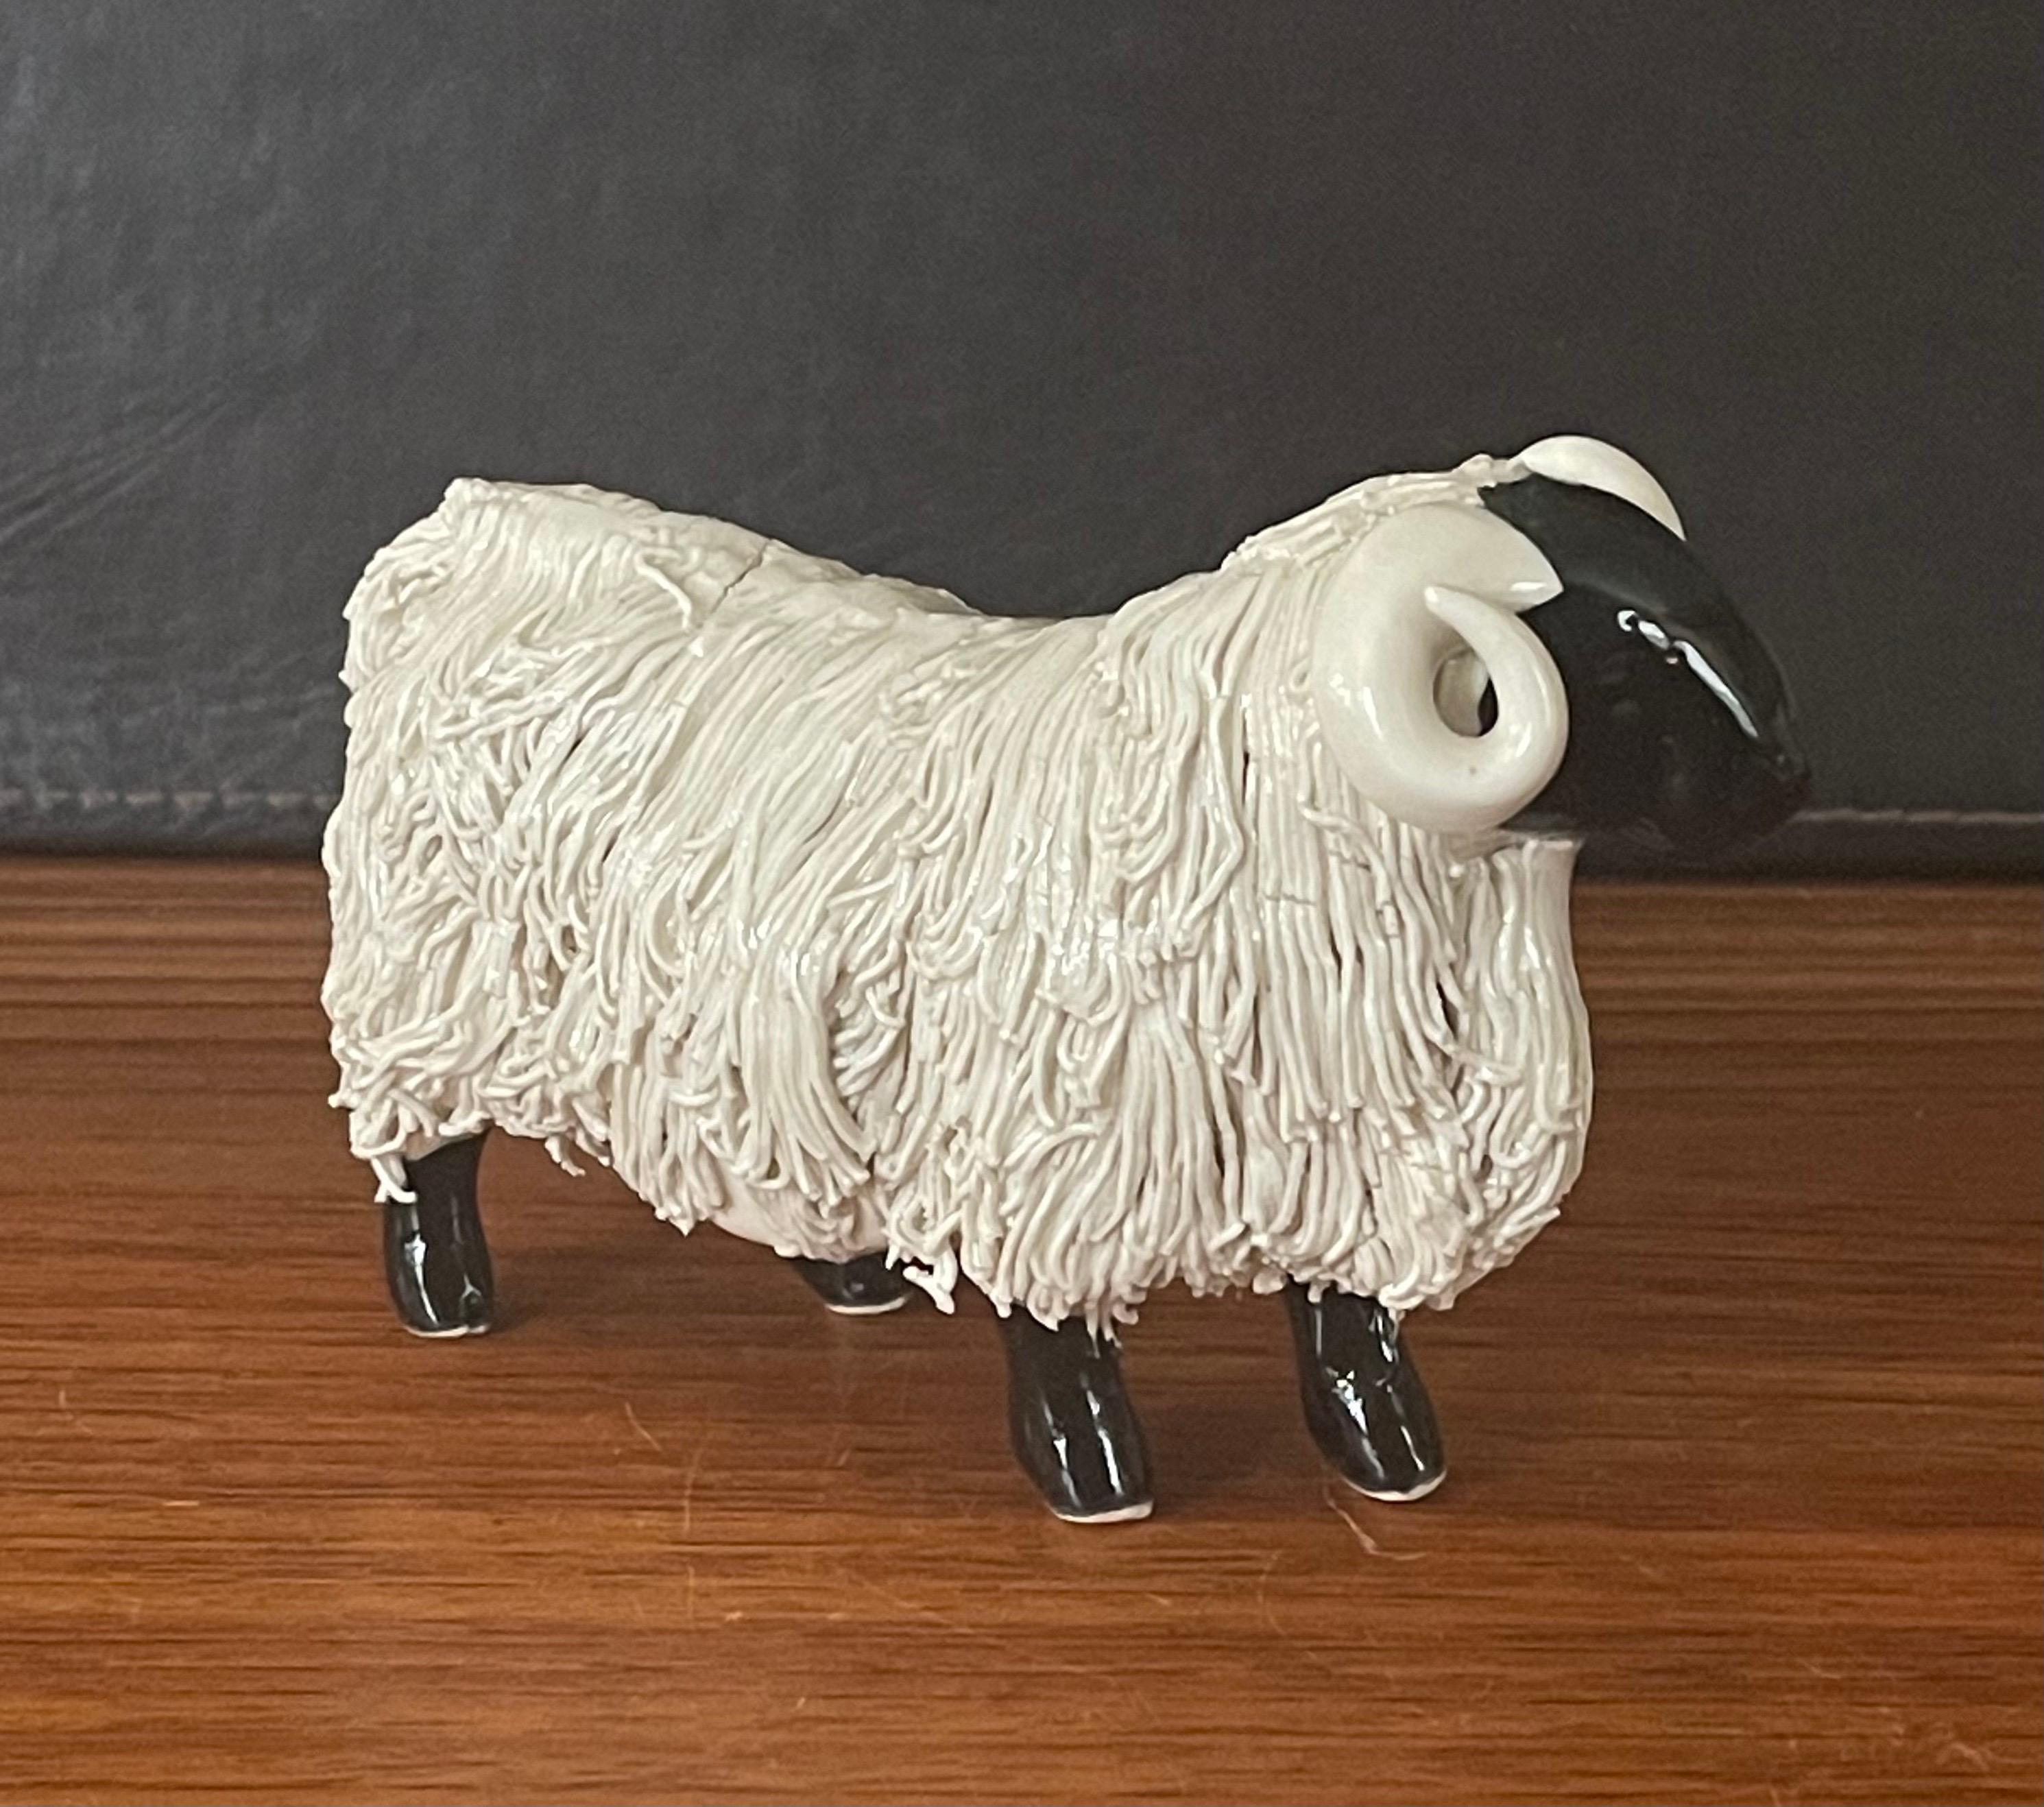 Scottish Pair of Midcentury Ceramic Rams / Sheep Figurines